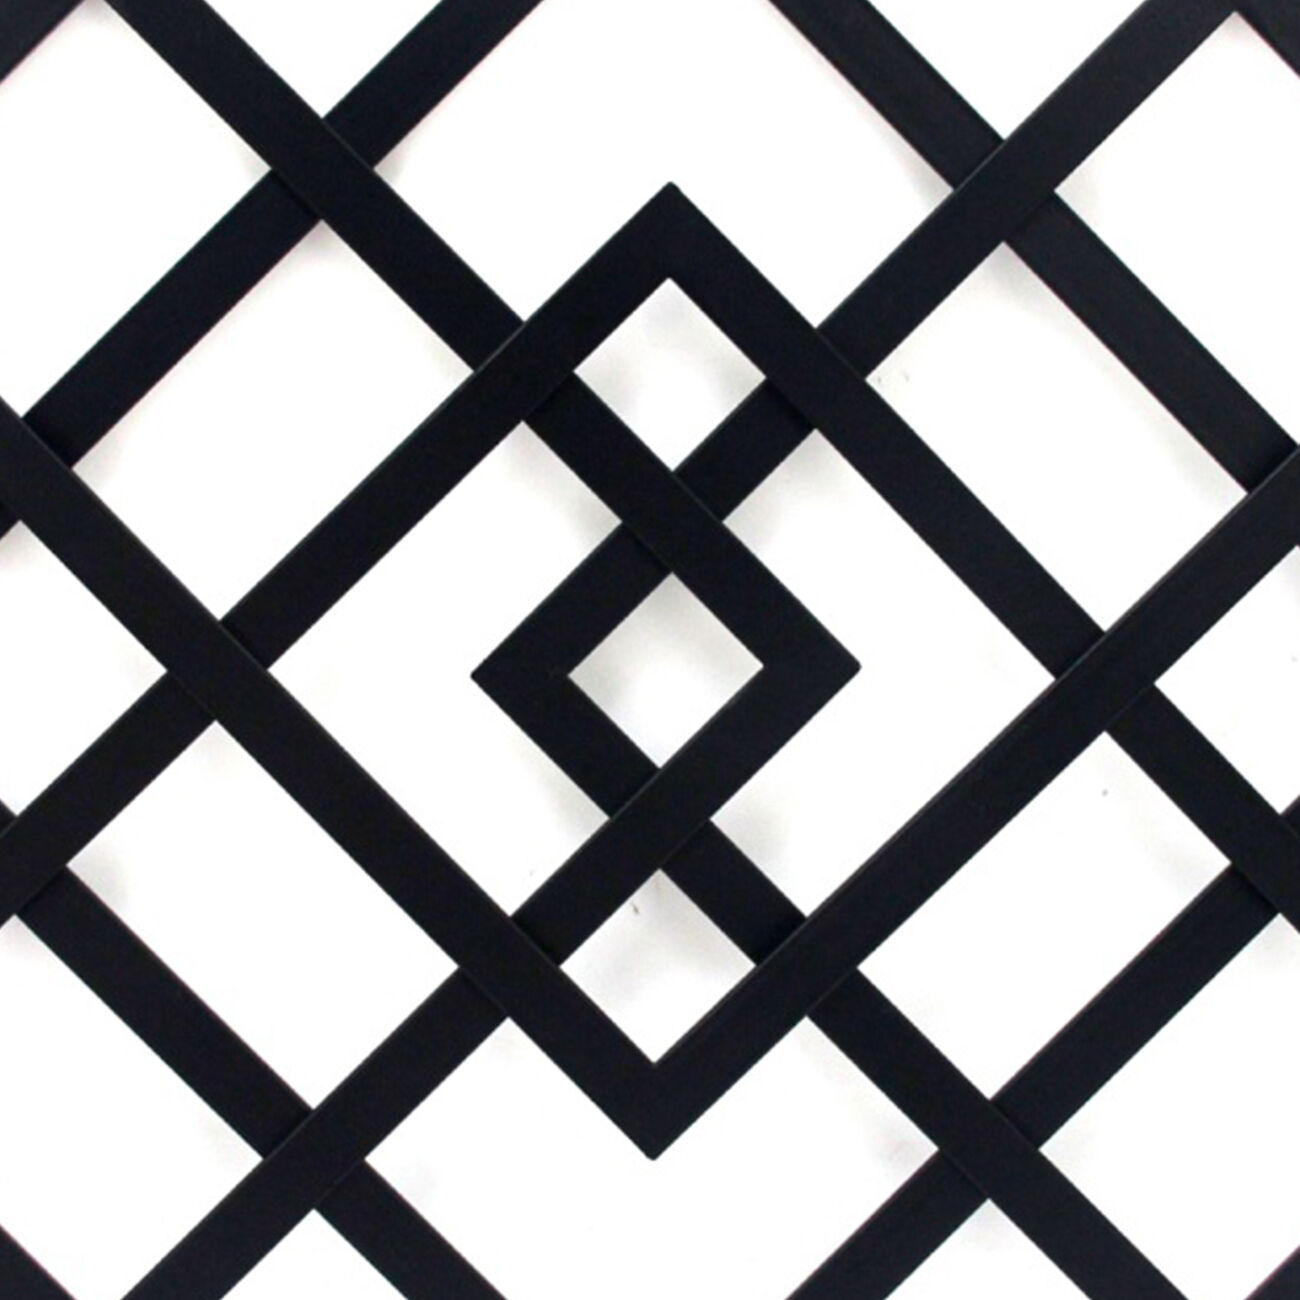 Contemporary Metal Wall Decor with Geometric Shape, Black